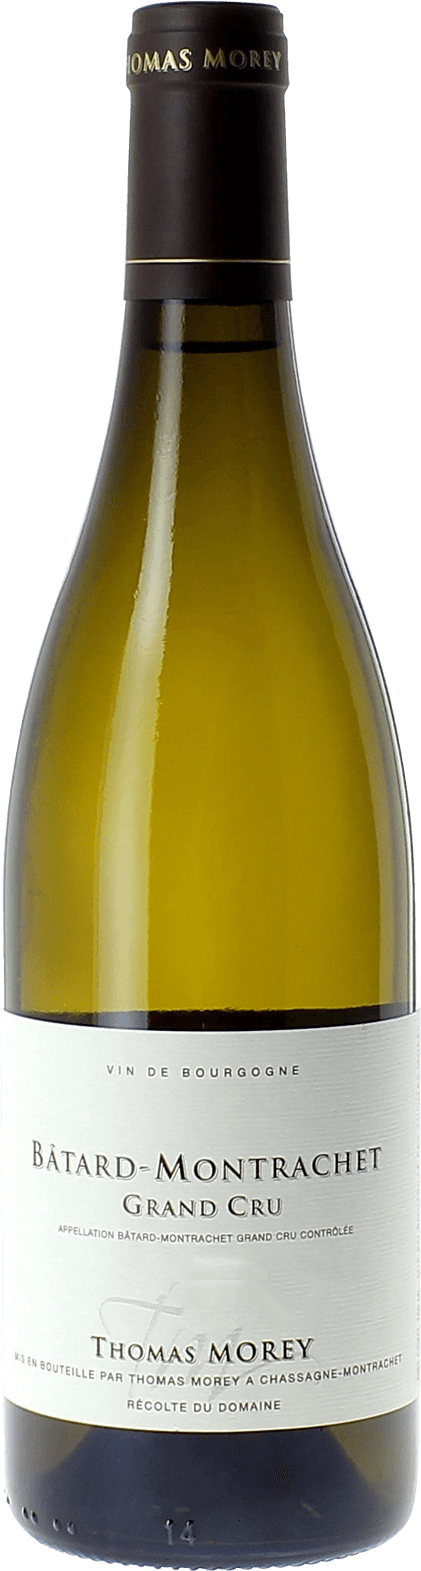 Batard  montrachet grand cru 2015 Domaine MOREY Thomas, Bourgogne blanc